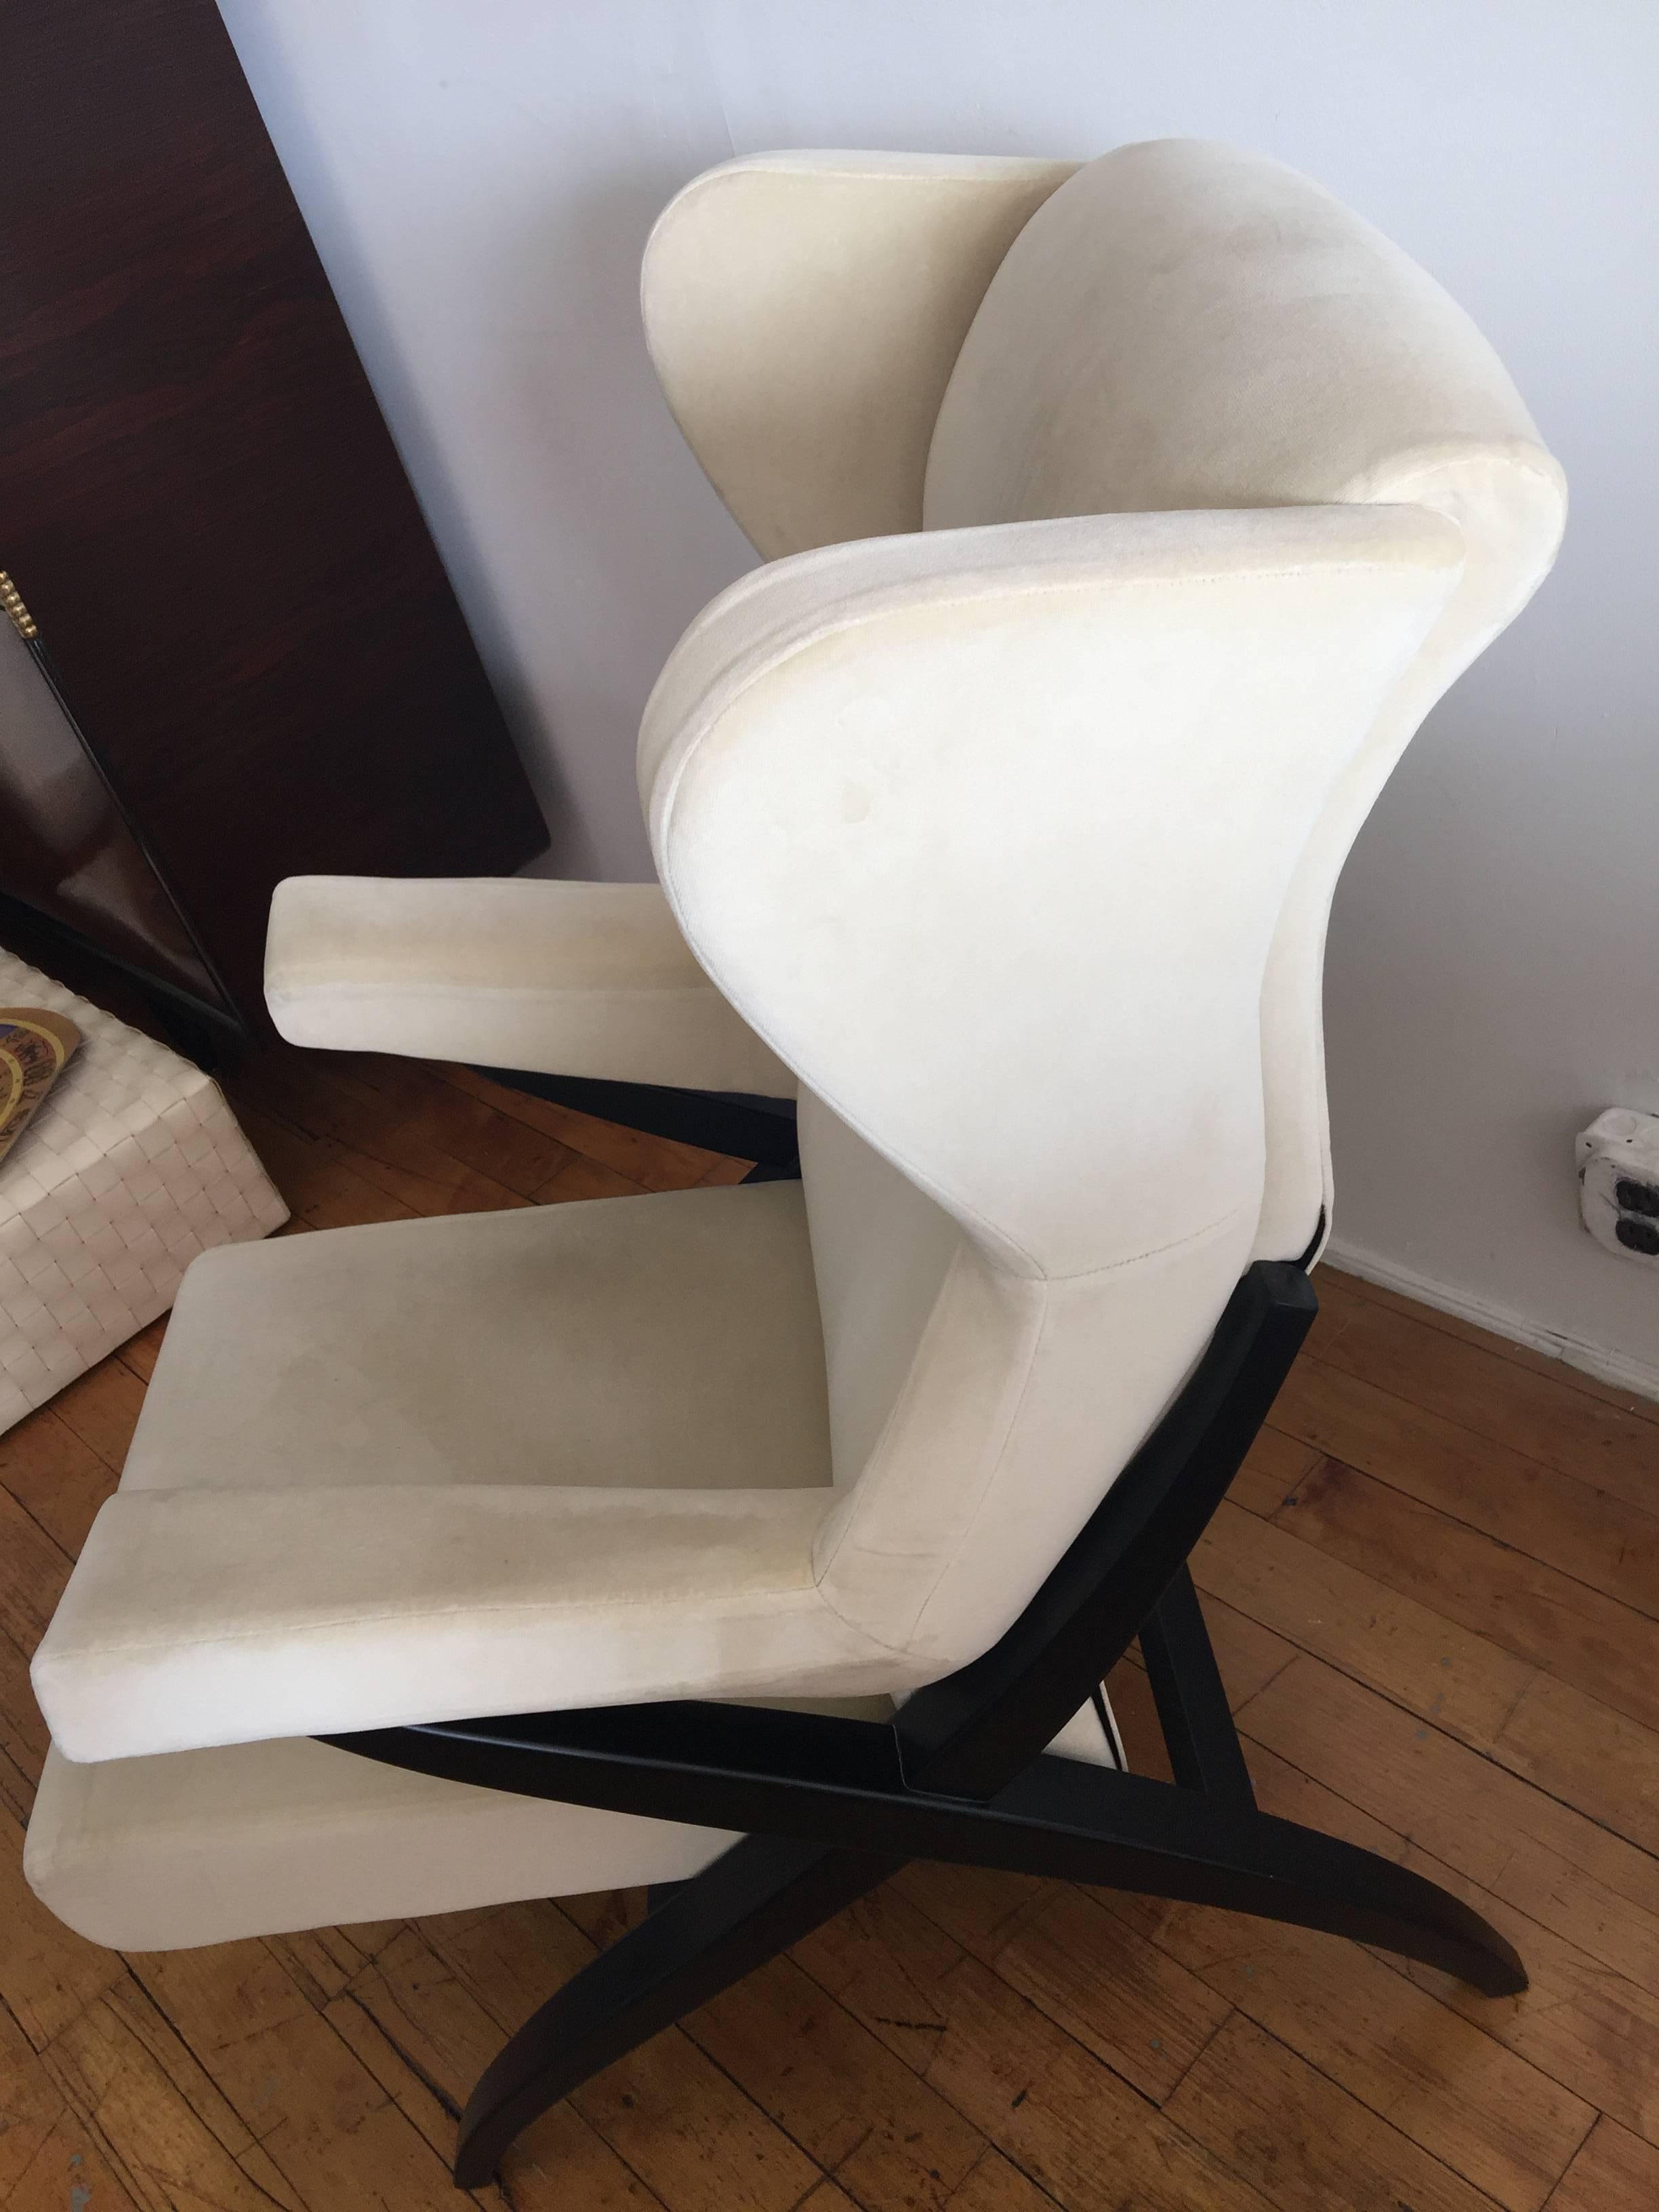 Italian Fiorenza Lounge Chair Design by Franco Albini 1952 for Arflex, Velvet Cotton